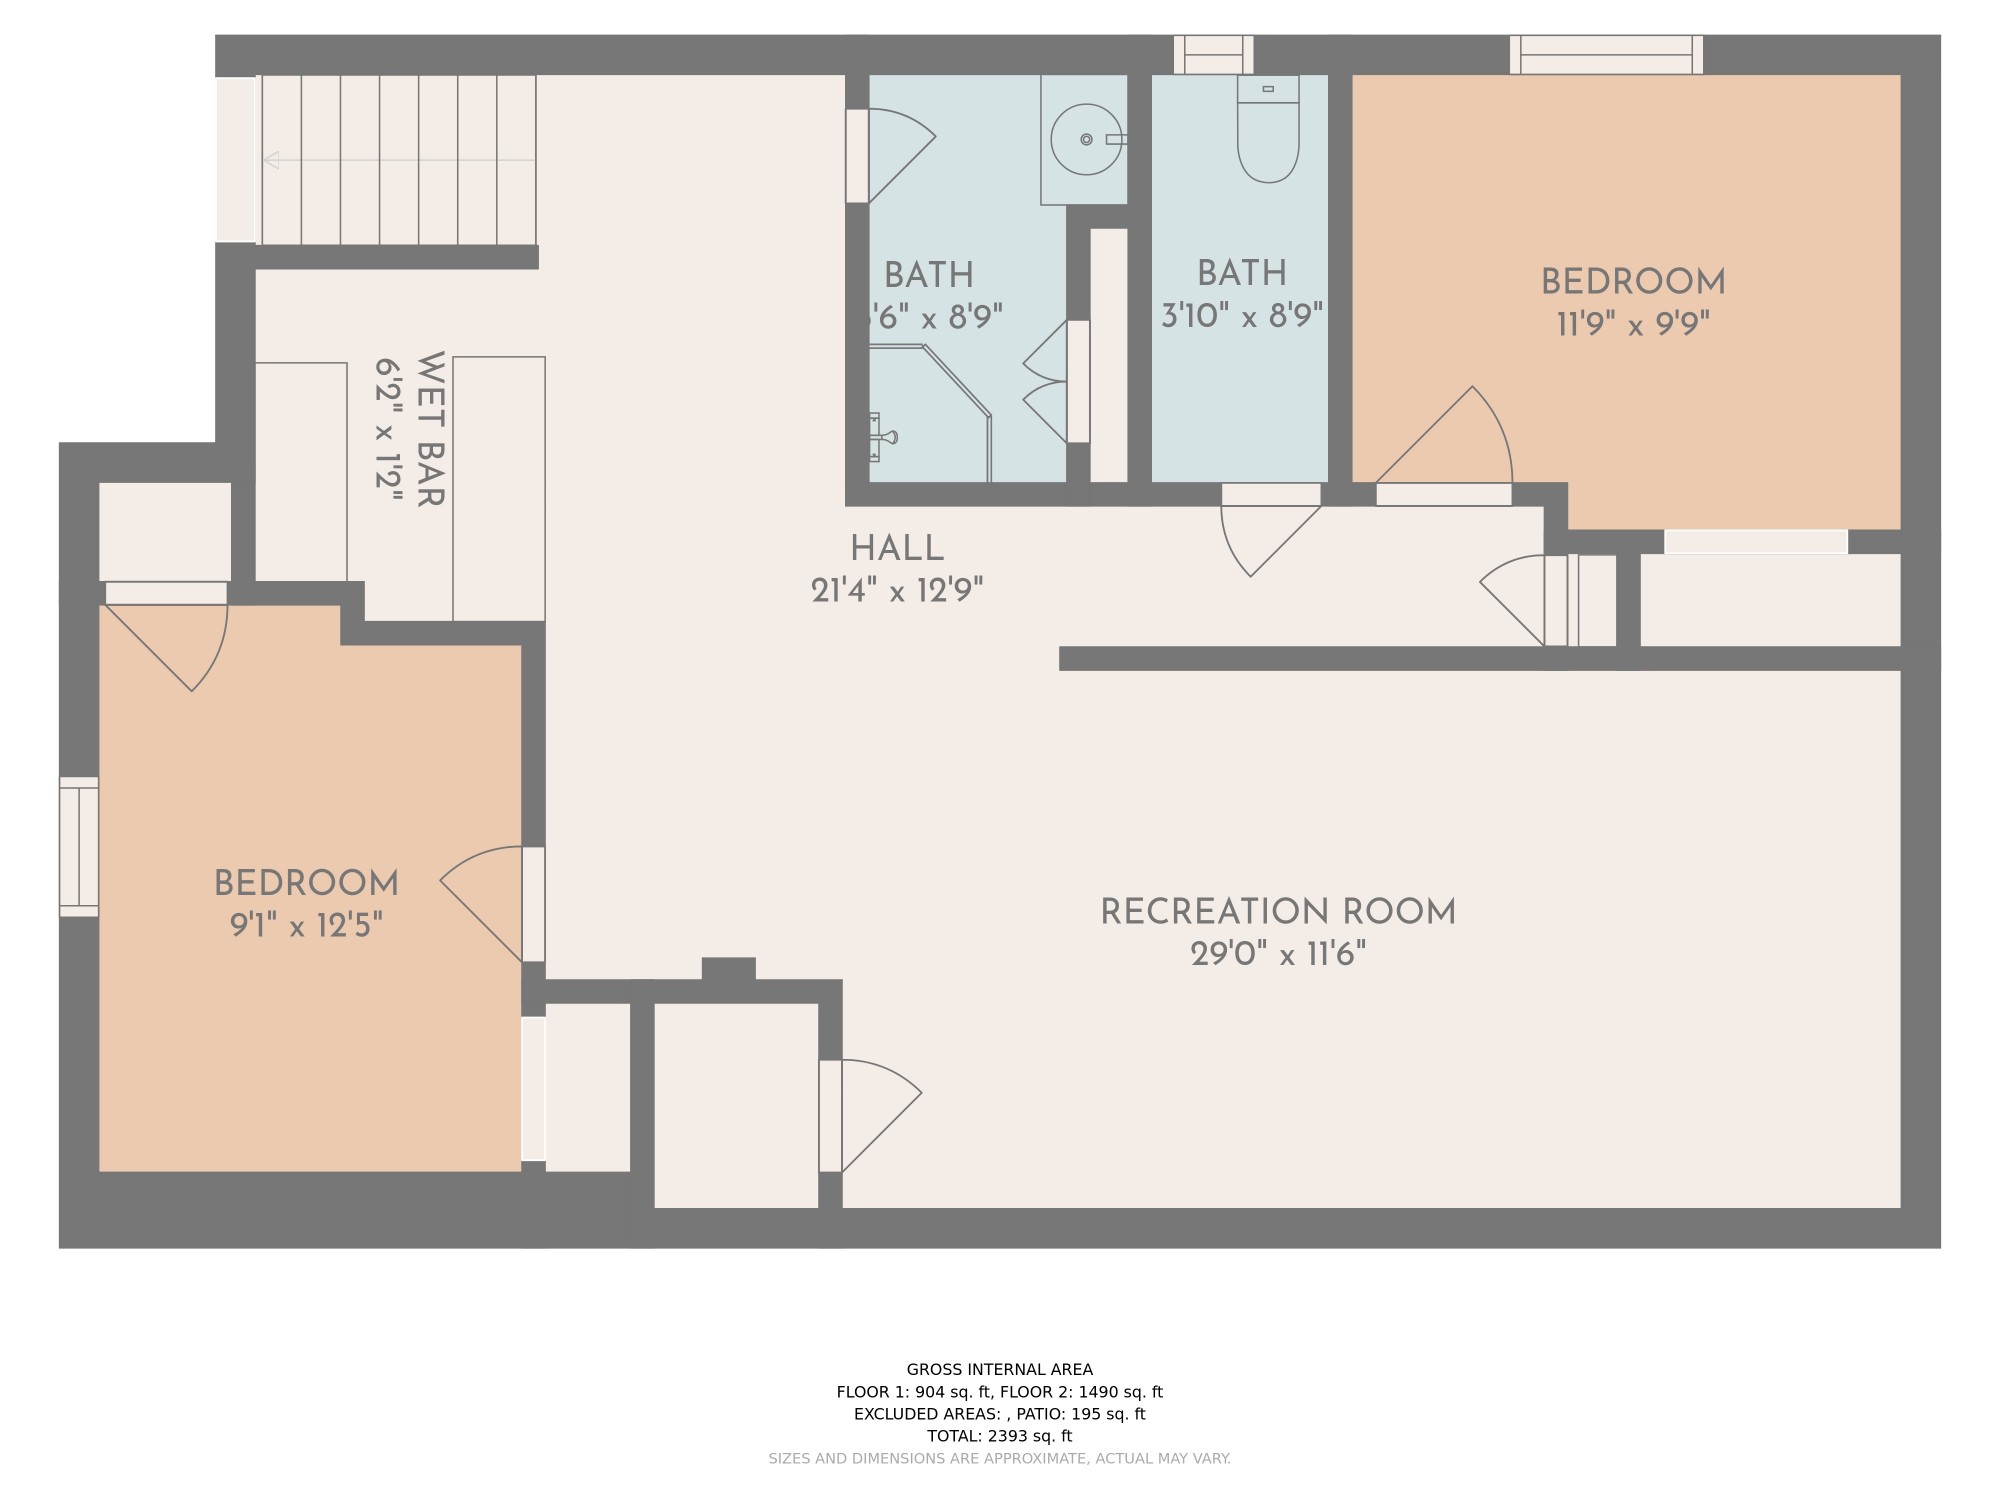 Basement Floor Plan Key Image